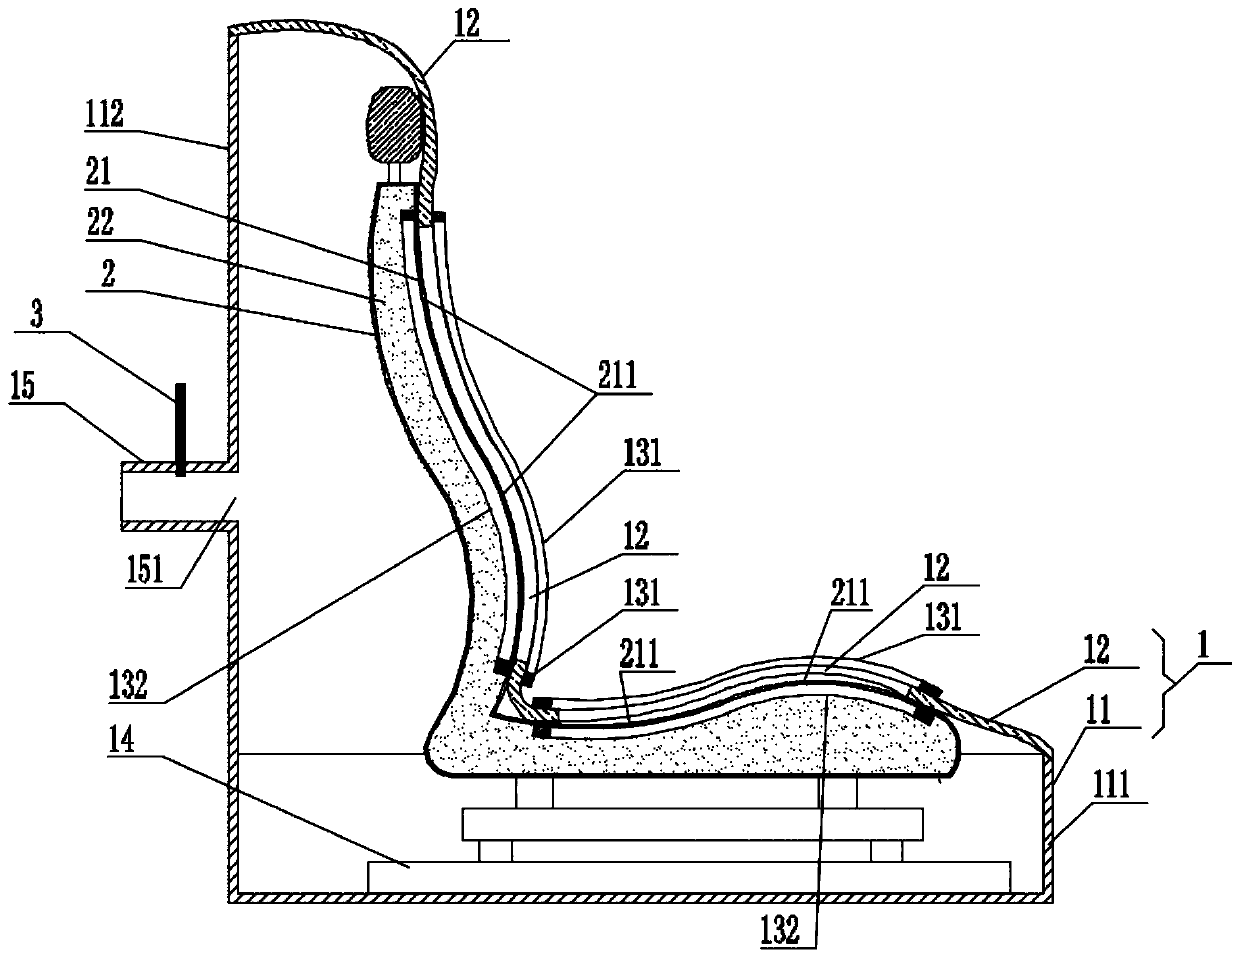 Vehicle seat ventilation amount measurement system